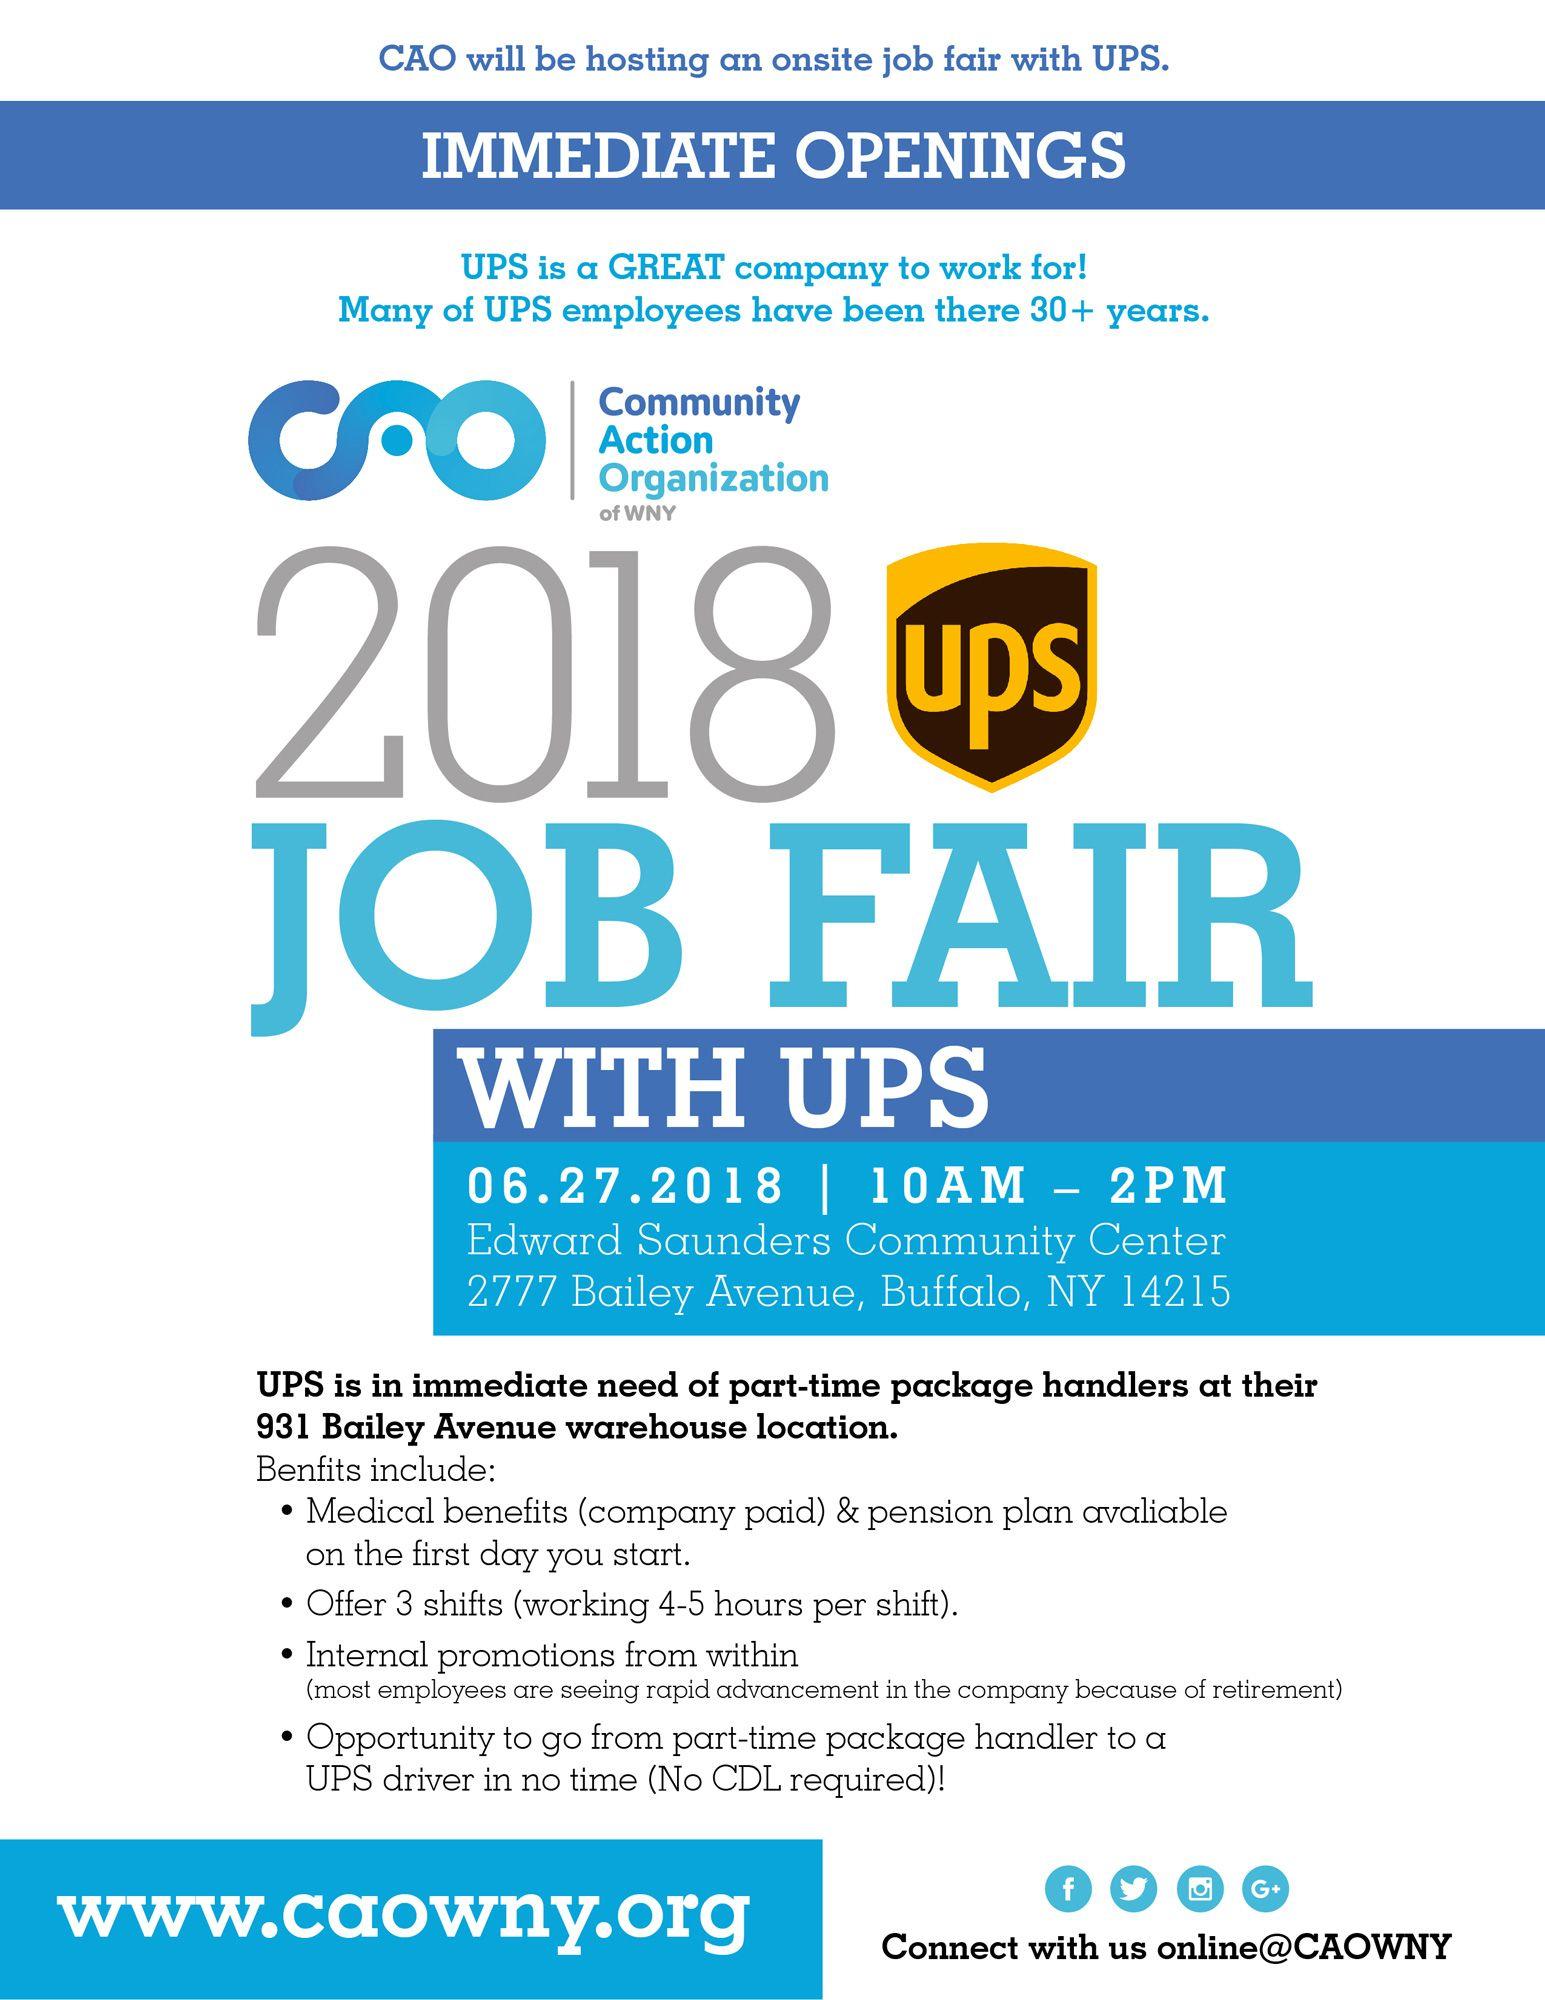 UPS Blue Logo - 2018 Job Fair with UPS - Community Action Organization of WNY